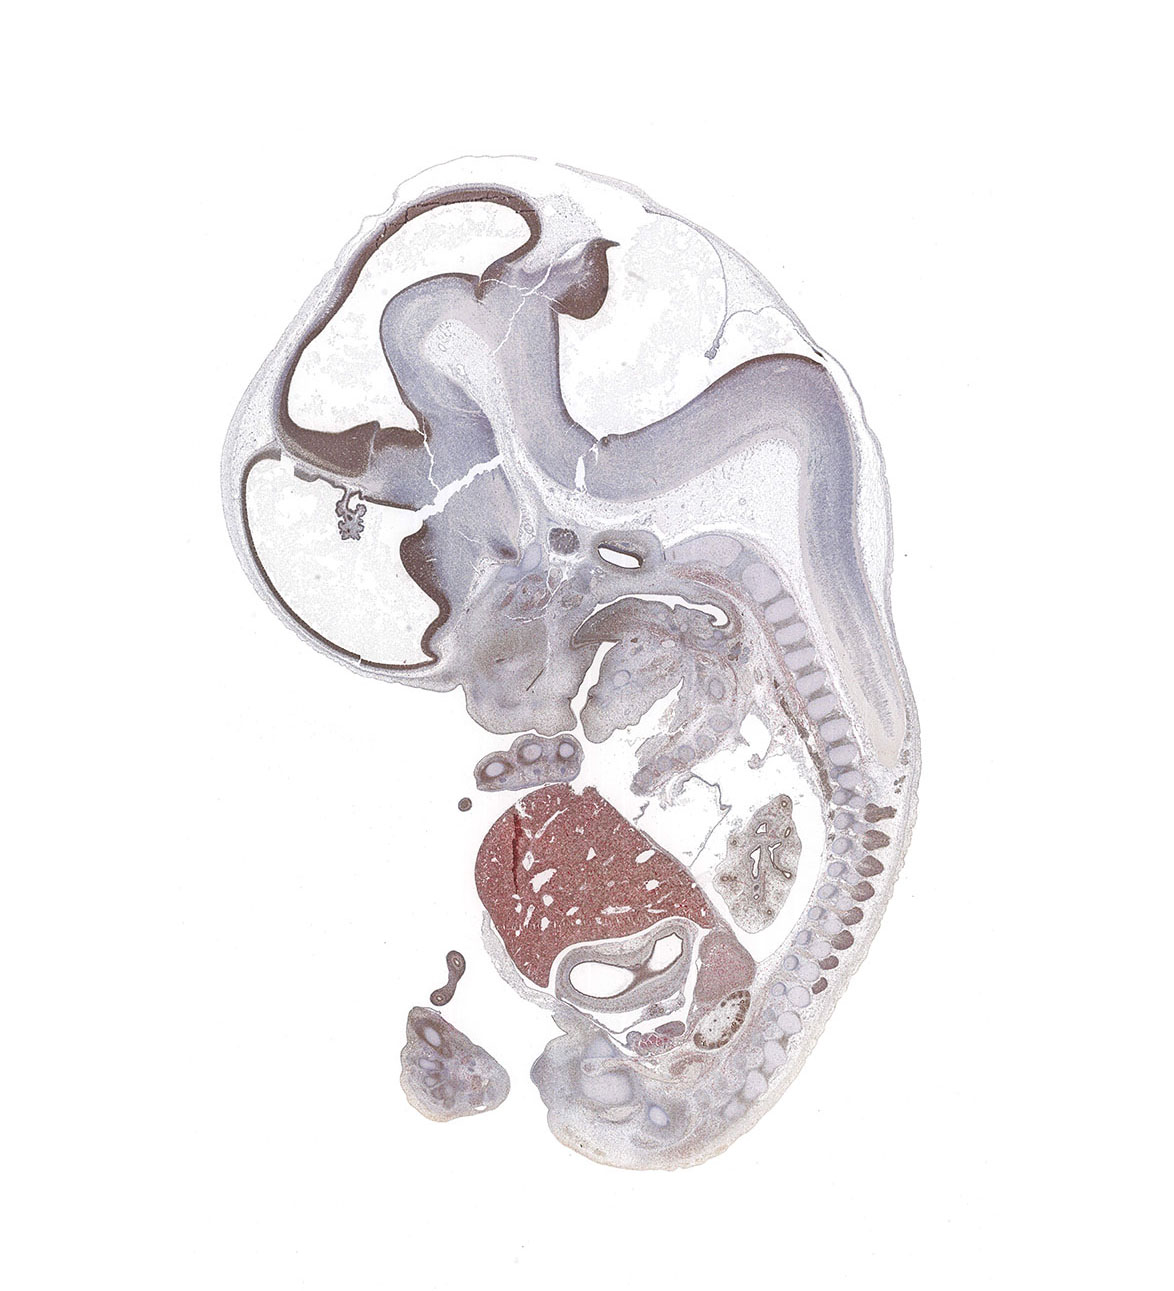 CS21 Human embryo